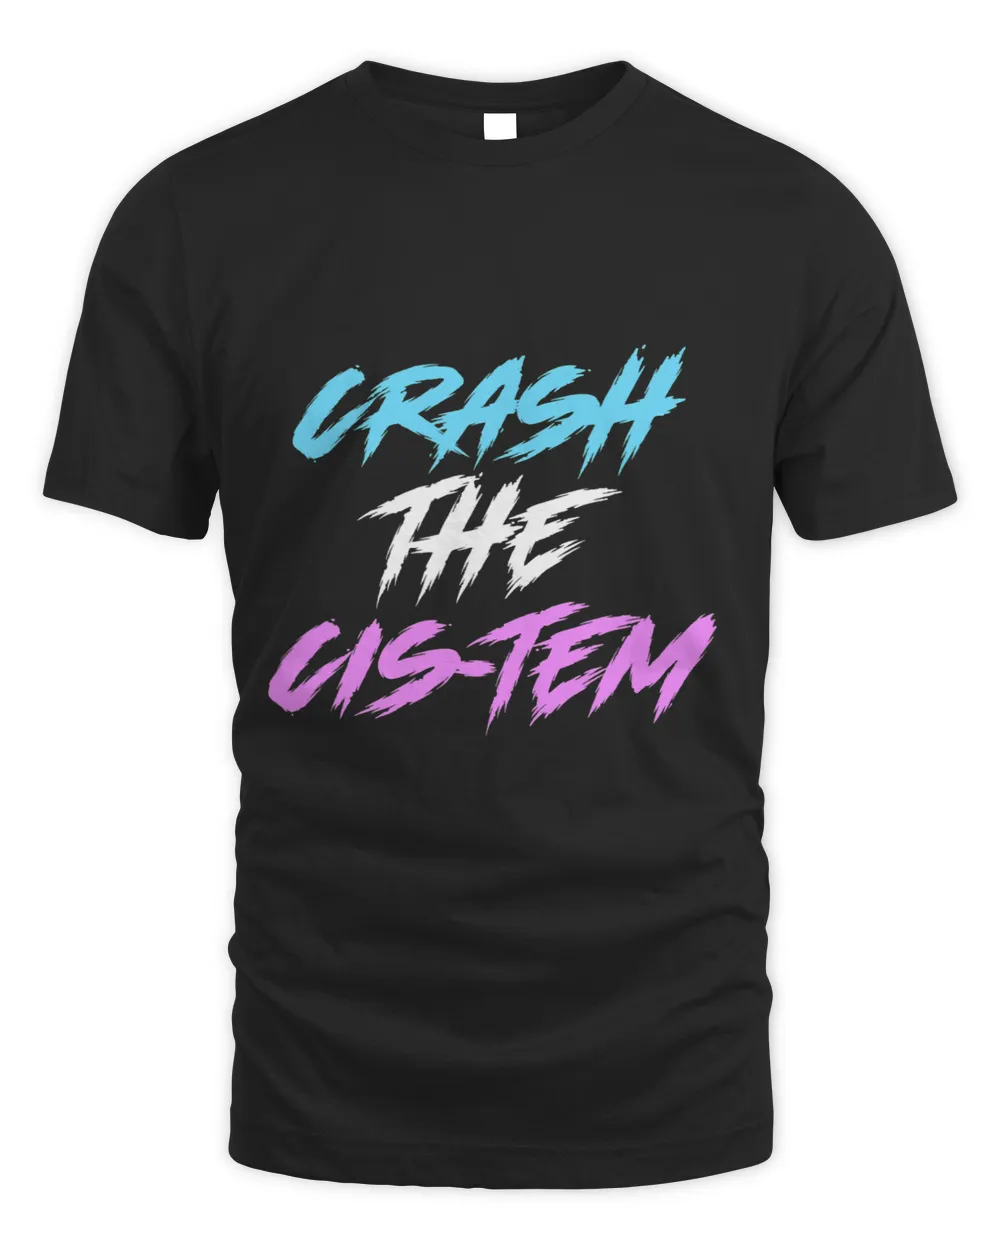 Crash The CisTem Drag Queen